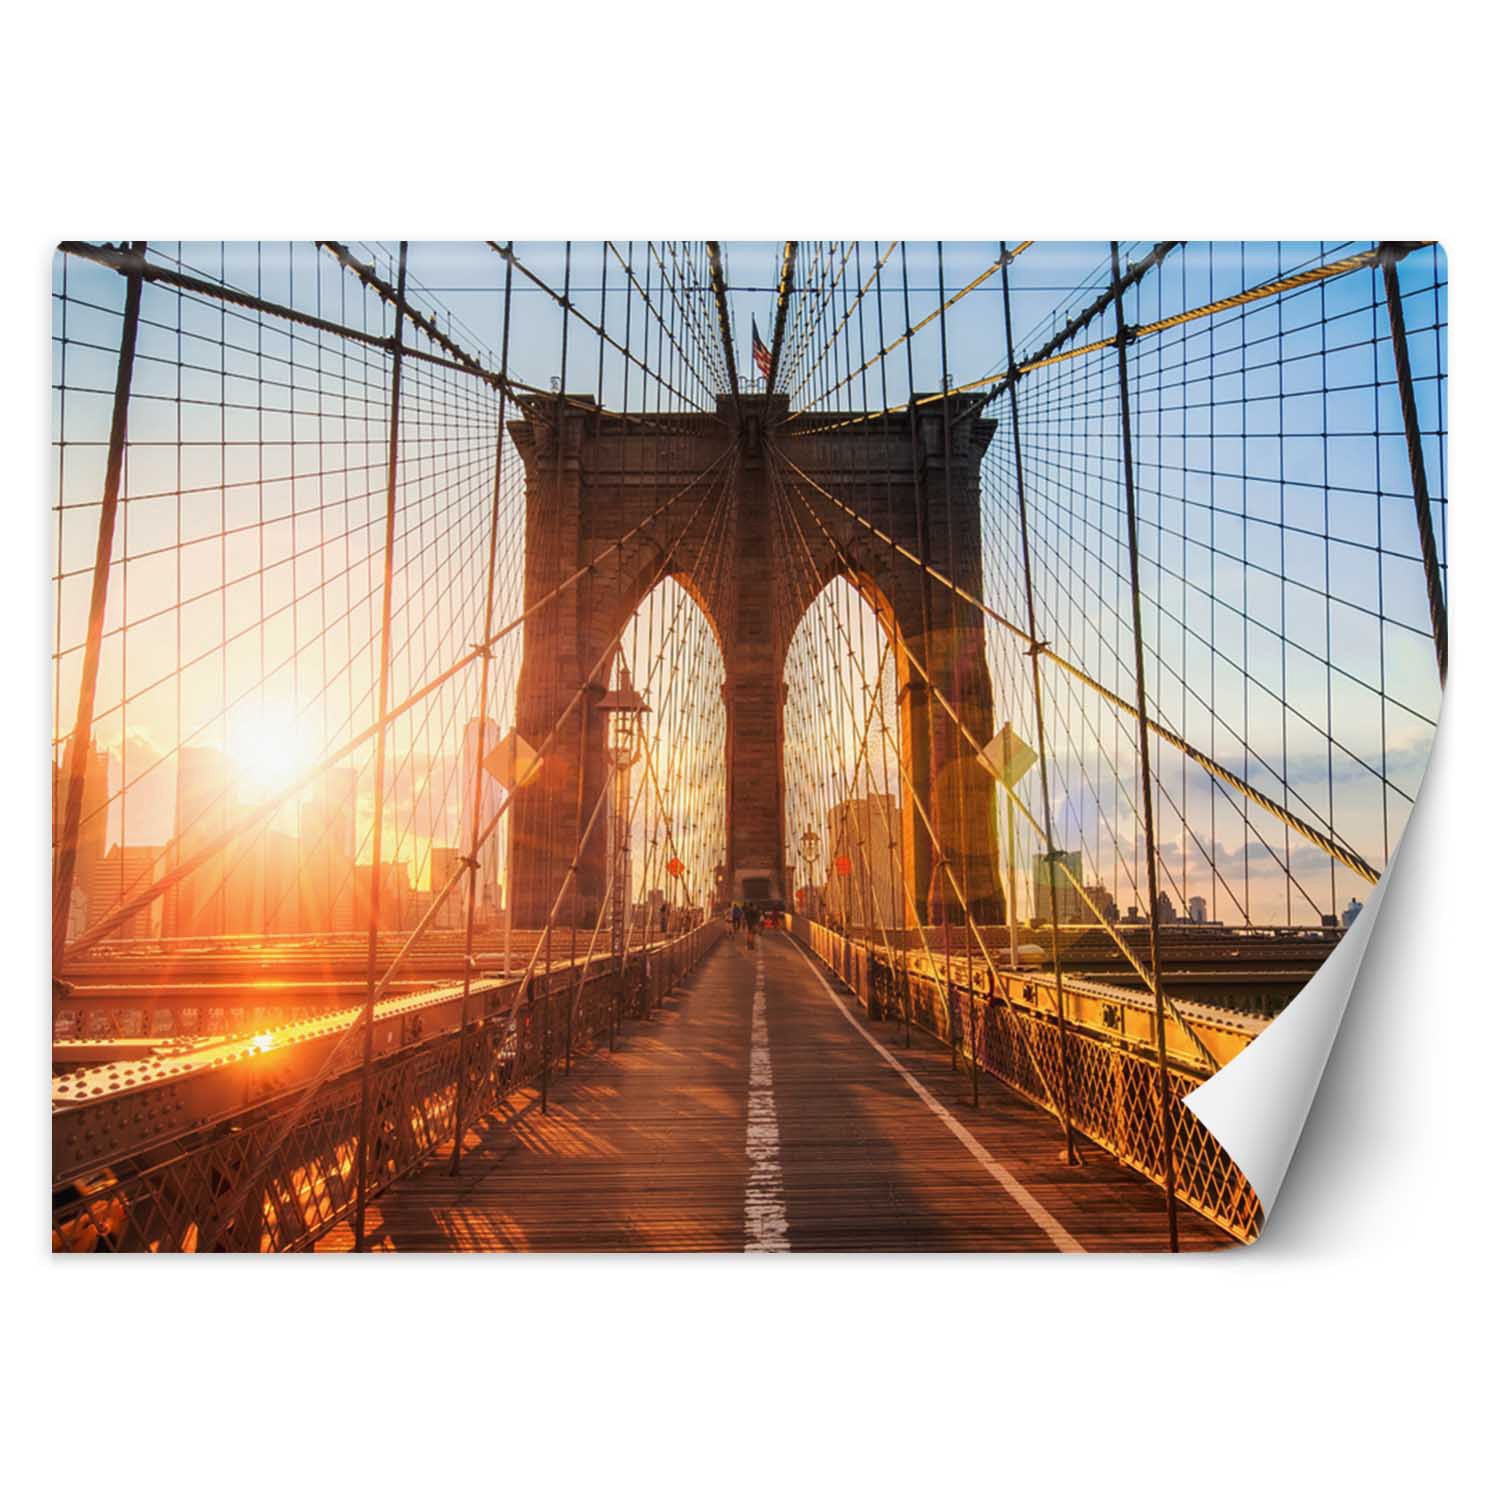 Trend24 – Behang – Brooklyn Bridge – Vliesbehang – Fotobehang – Behang Woonkamer – 350x245x2 cm – Incl. behanglijm